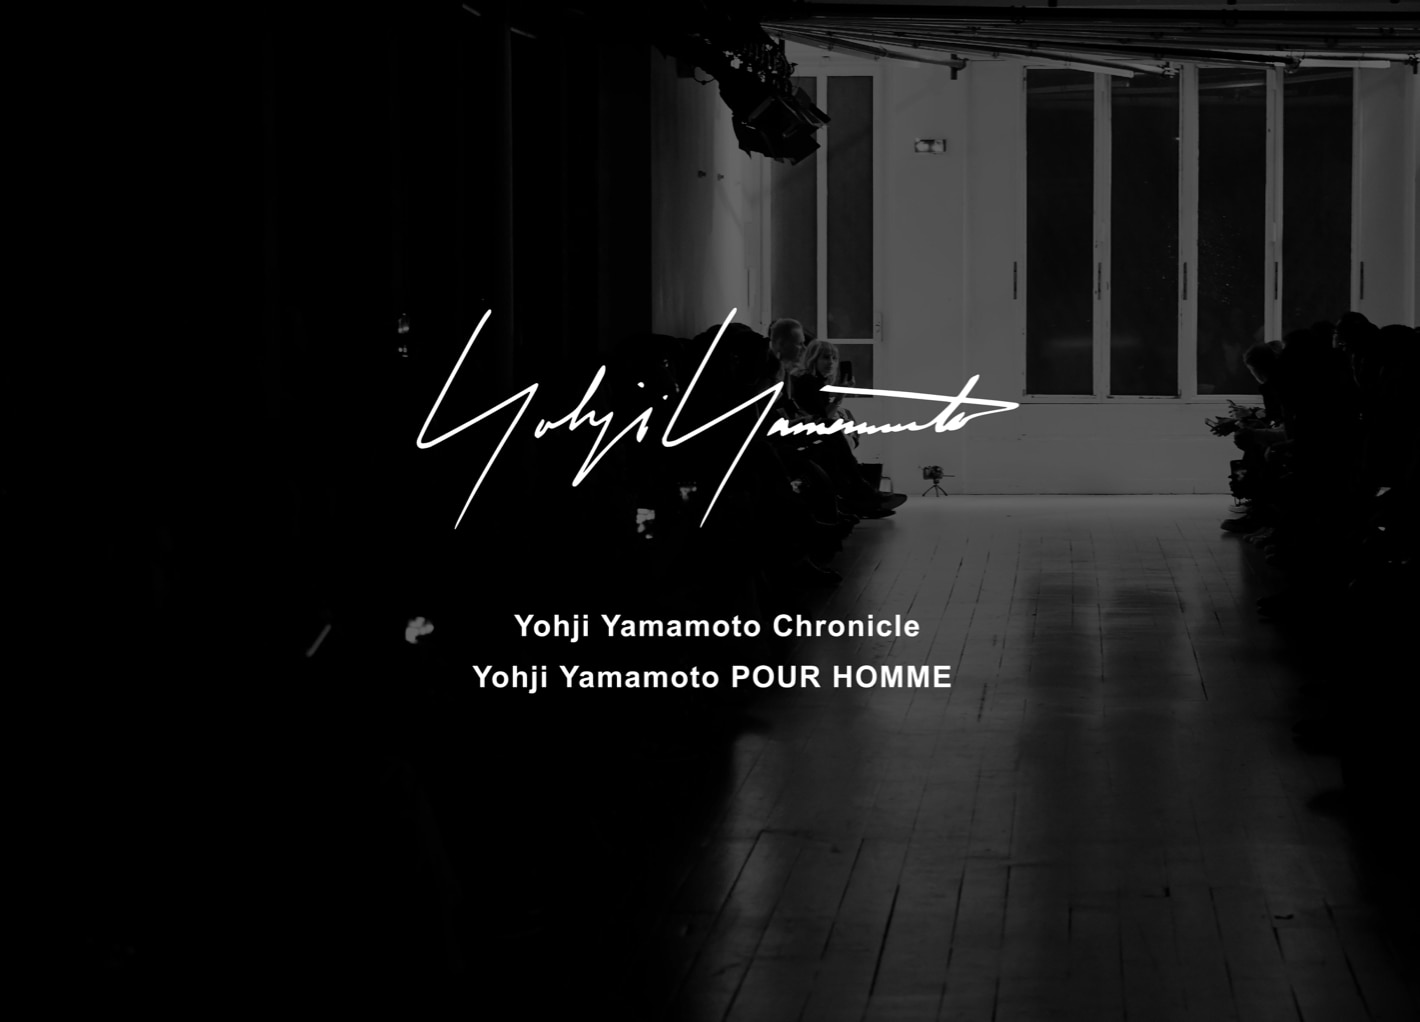 Yohji Yamamoto Chronicle – Yohji Yamamoto POUR HOMME